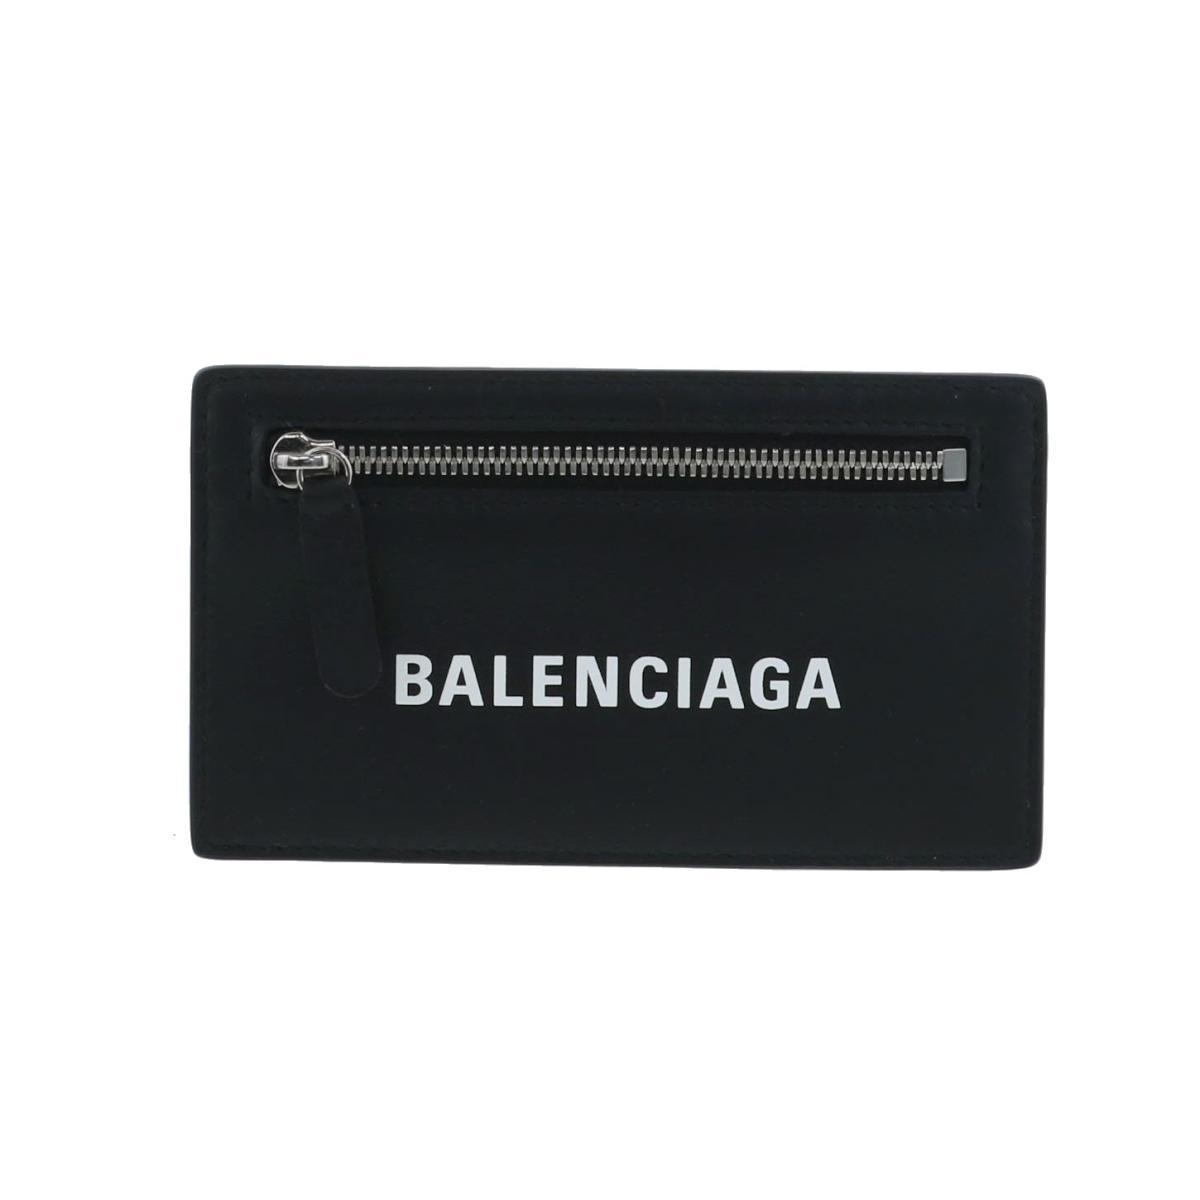 BALENCIAGA バレンシアガ 小物 名刺入れ/カードケース 501651 Black レザー エブリディ ロング カードケース 